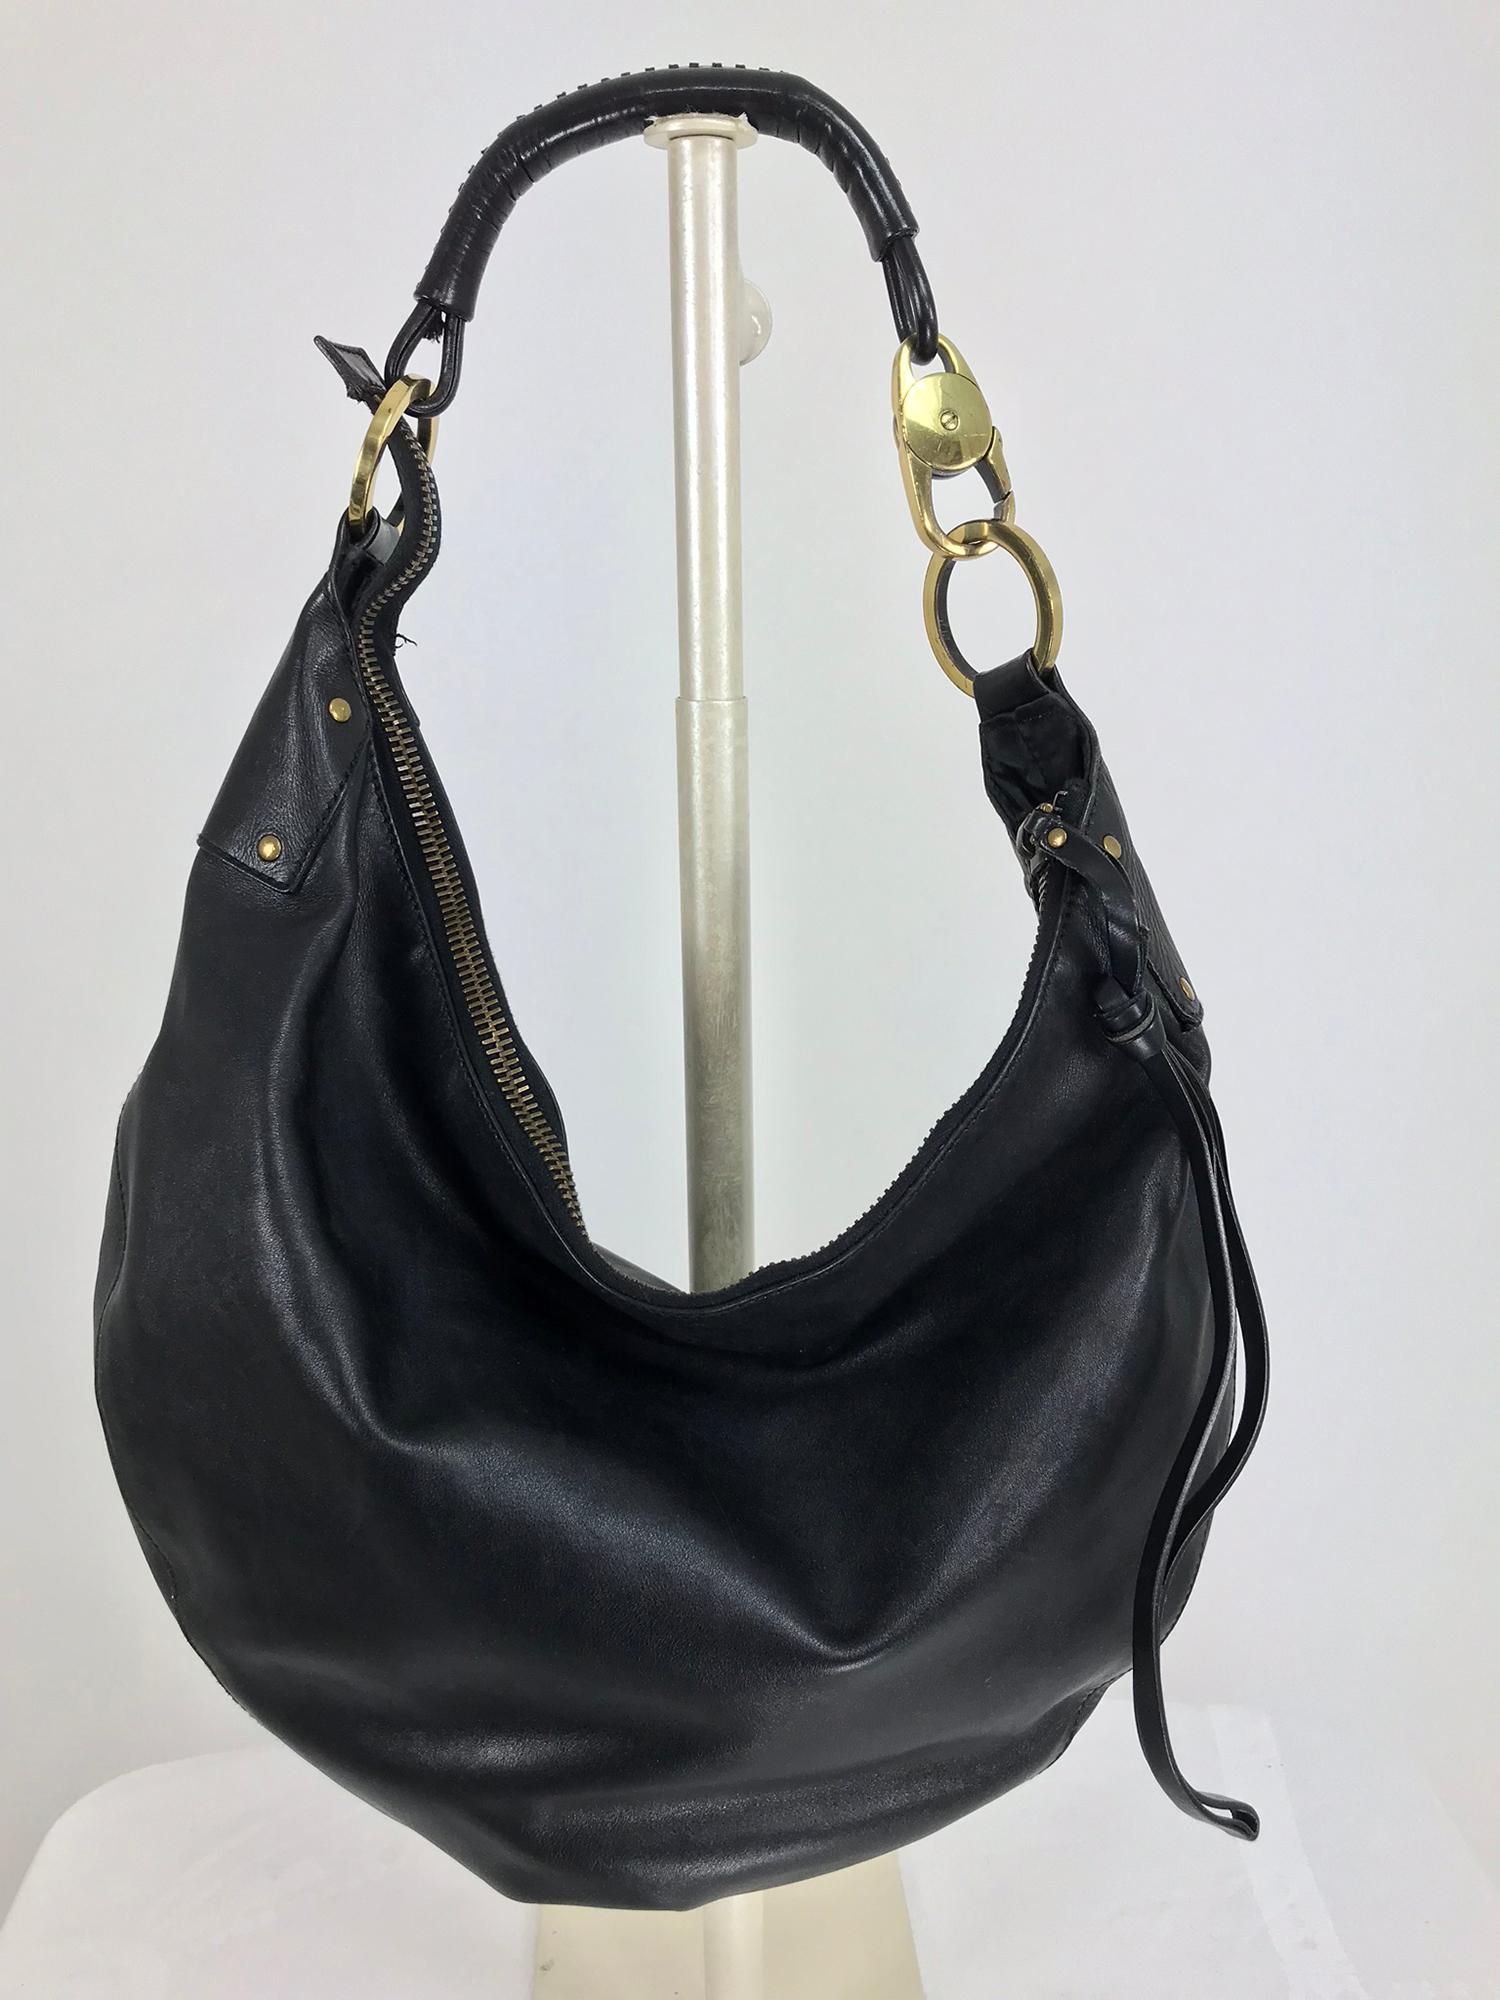 Women's or Men's Gucci Black Leather shoulder bag with gold hardware